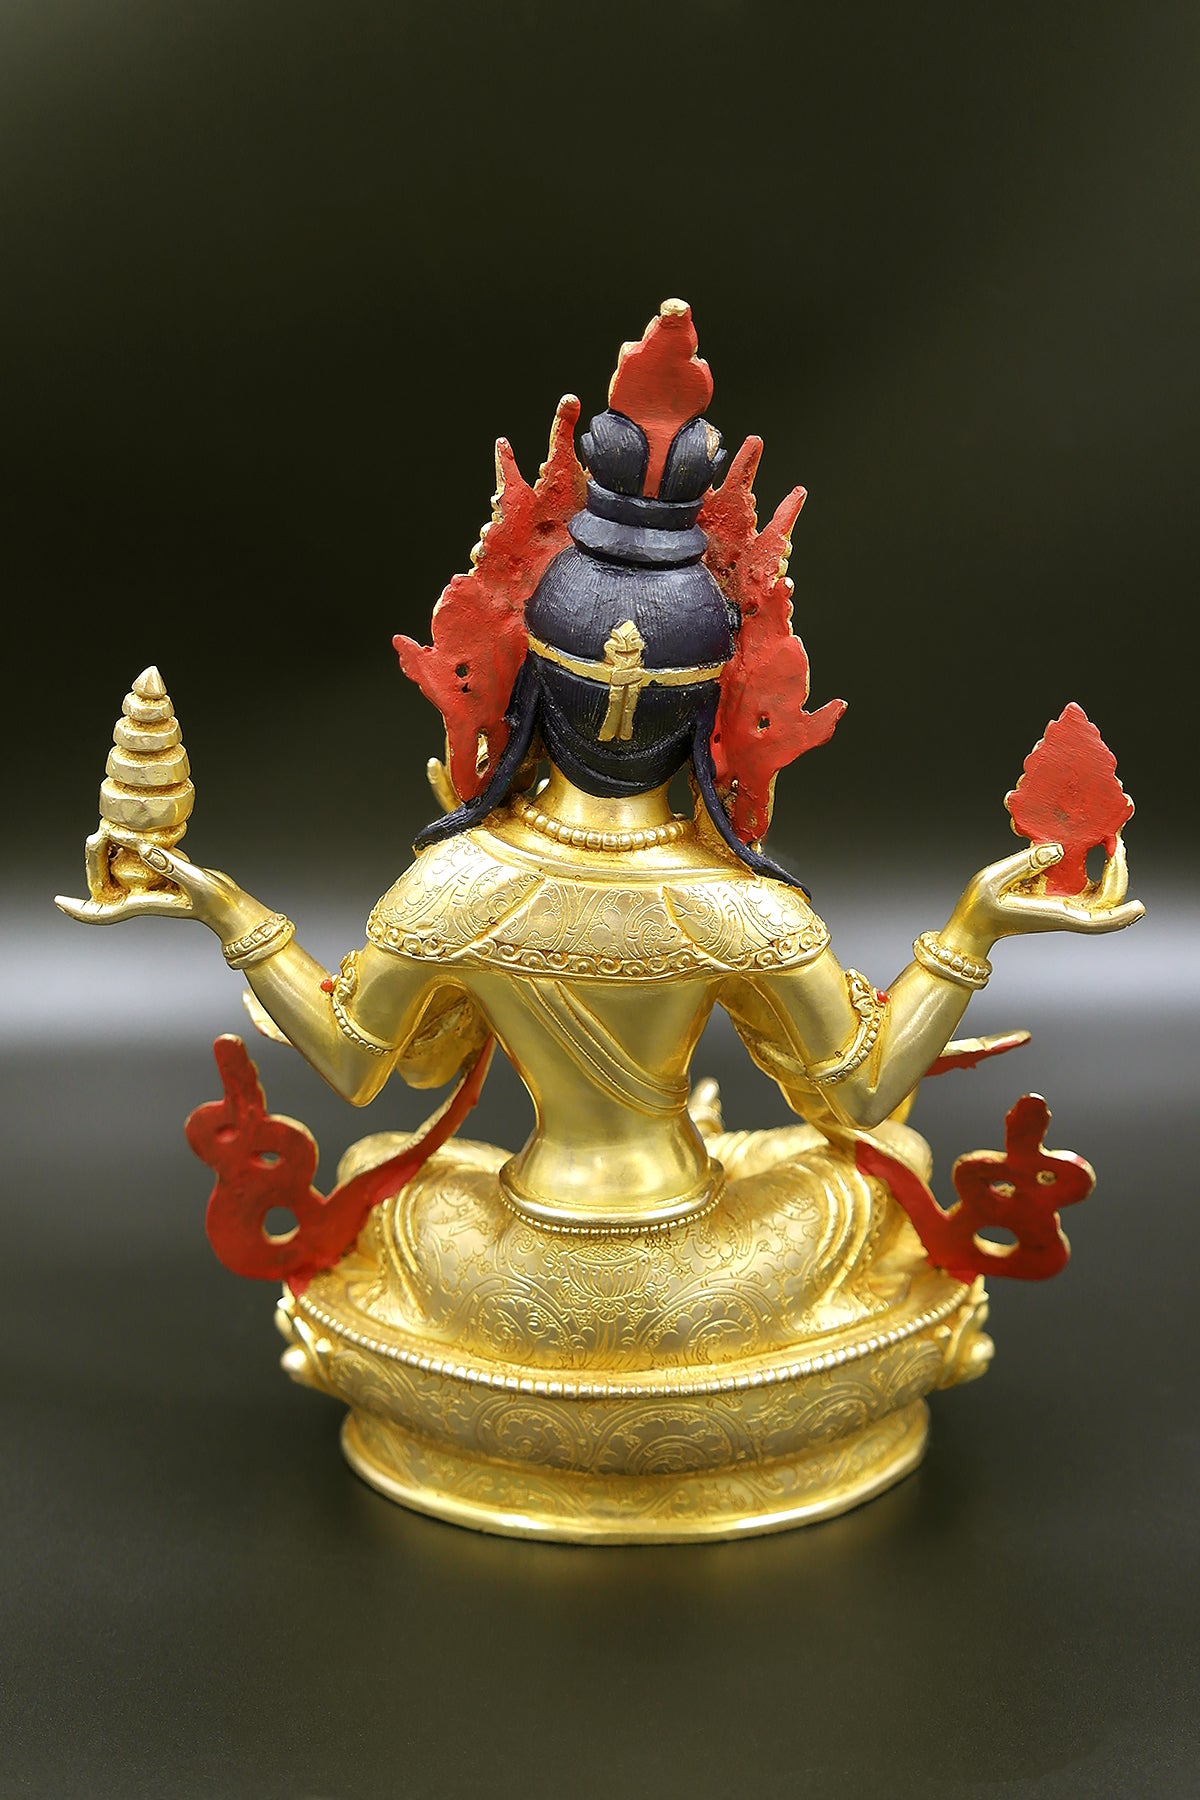 Hindu goddess Laxmi Statue - The Goddess of Wealth and Good Fortune 8"